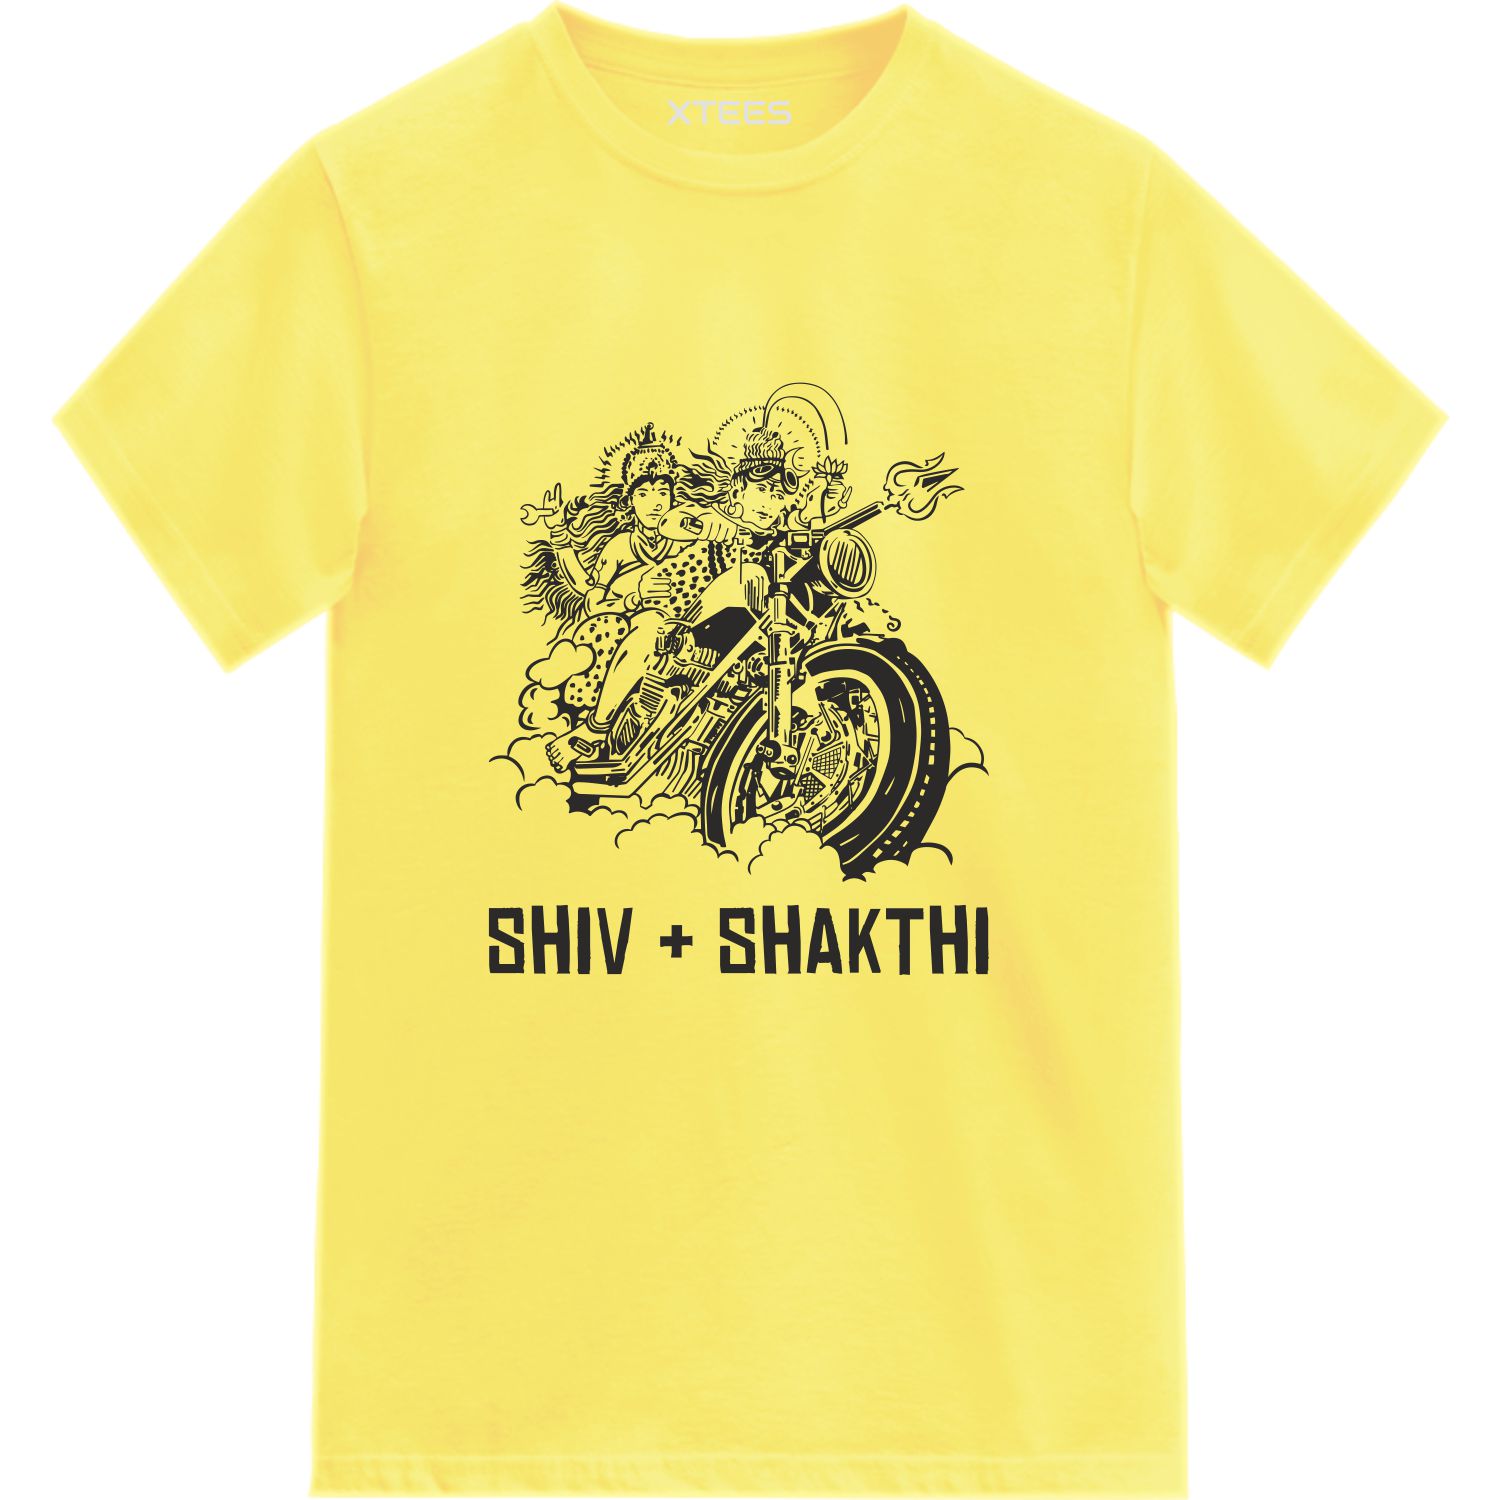 Shiv + Shakthi Couple Biker T-shirt India image